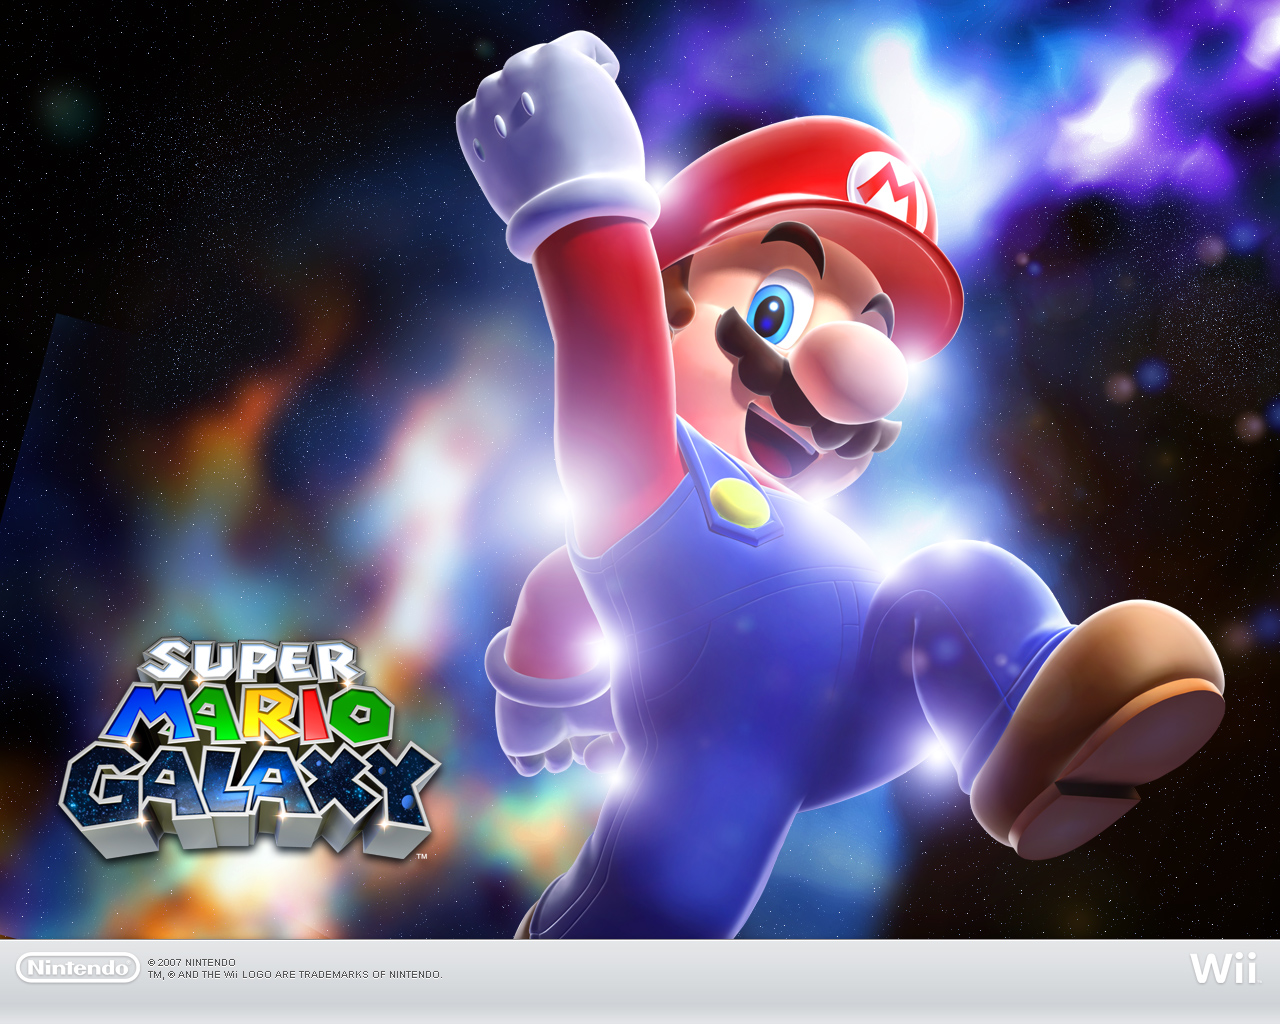 TMK | Downloads | Images | Wallpaper | Super Mario Galaxy (Wii)